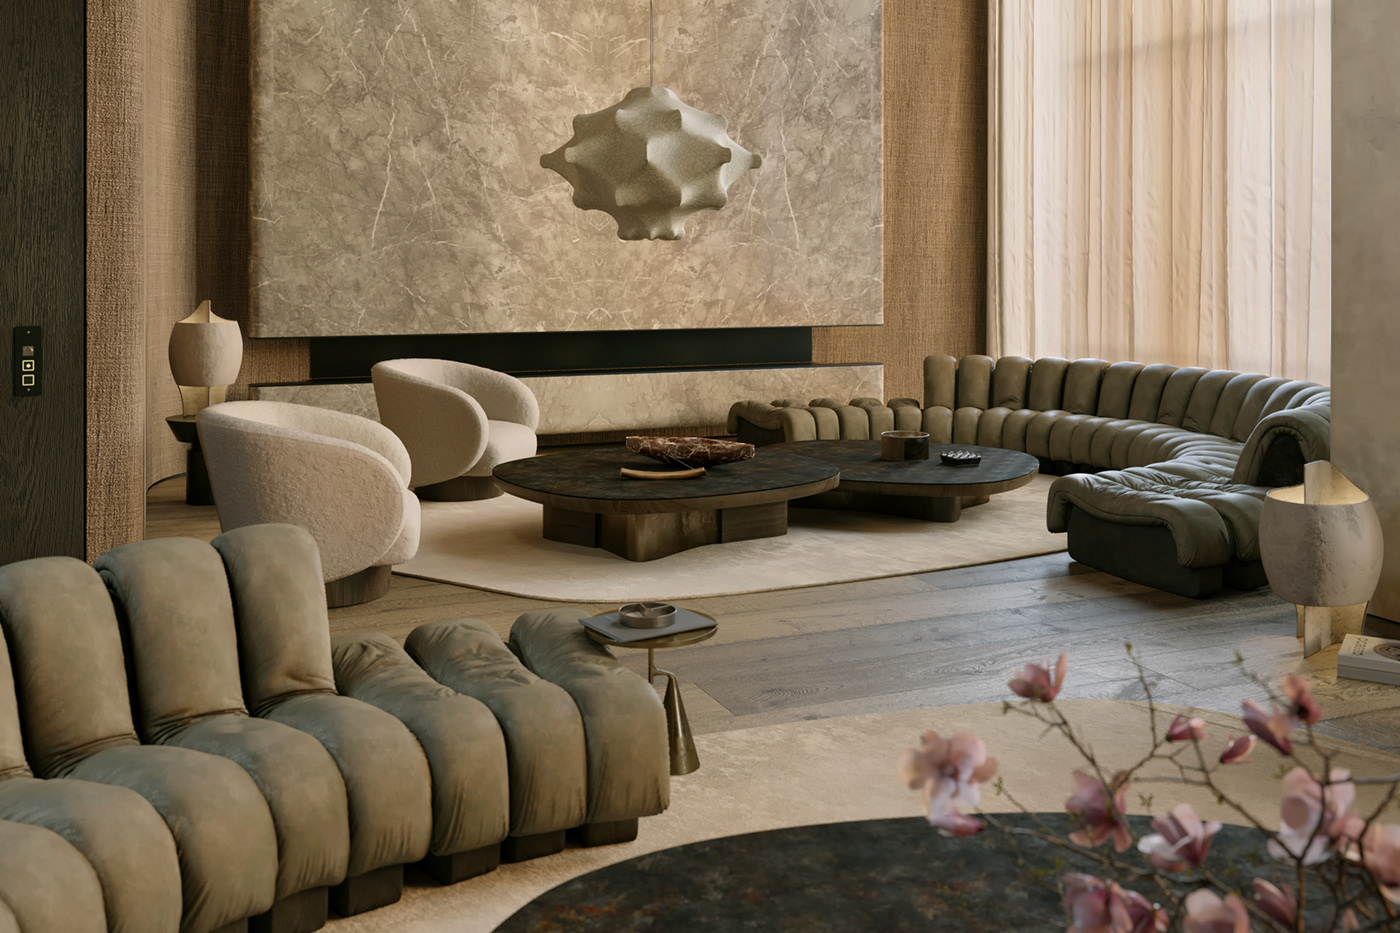 Los Angeles interior design  living room design Villa architecture KSH